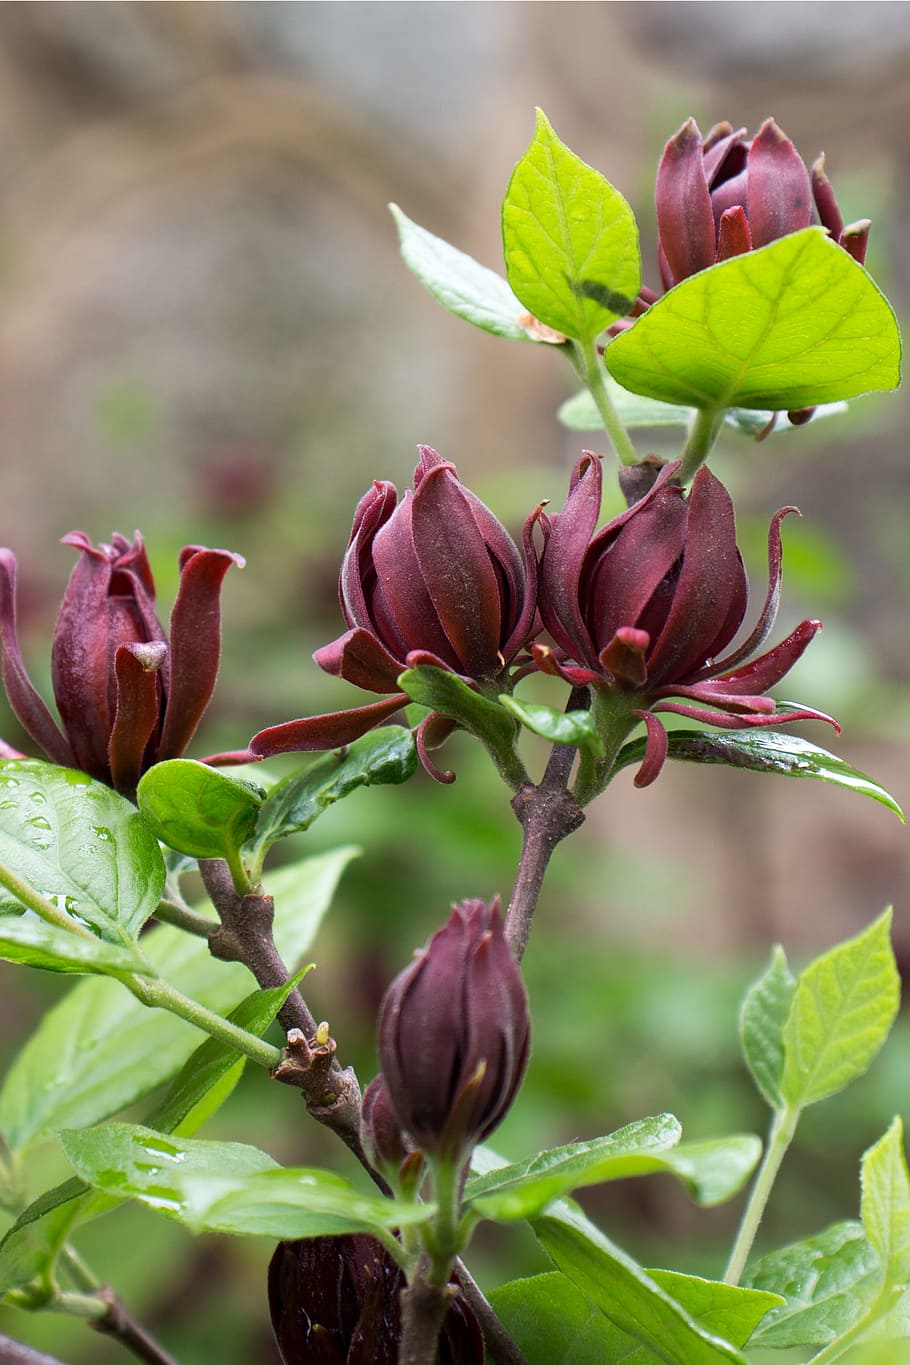 calycanthus floridus, comumente chamado, carolina pimenta da Jamaica, incomum, arredondado, arbusto decíduo, cresce 6-9, altura., características, perfumado